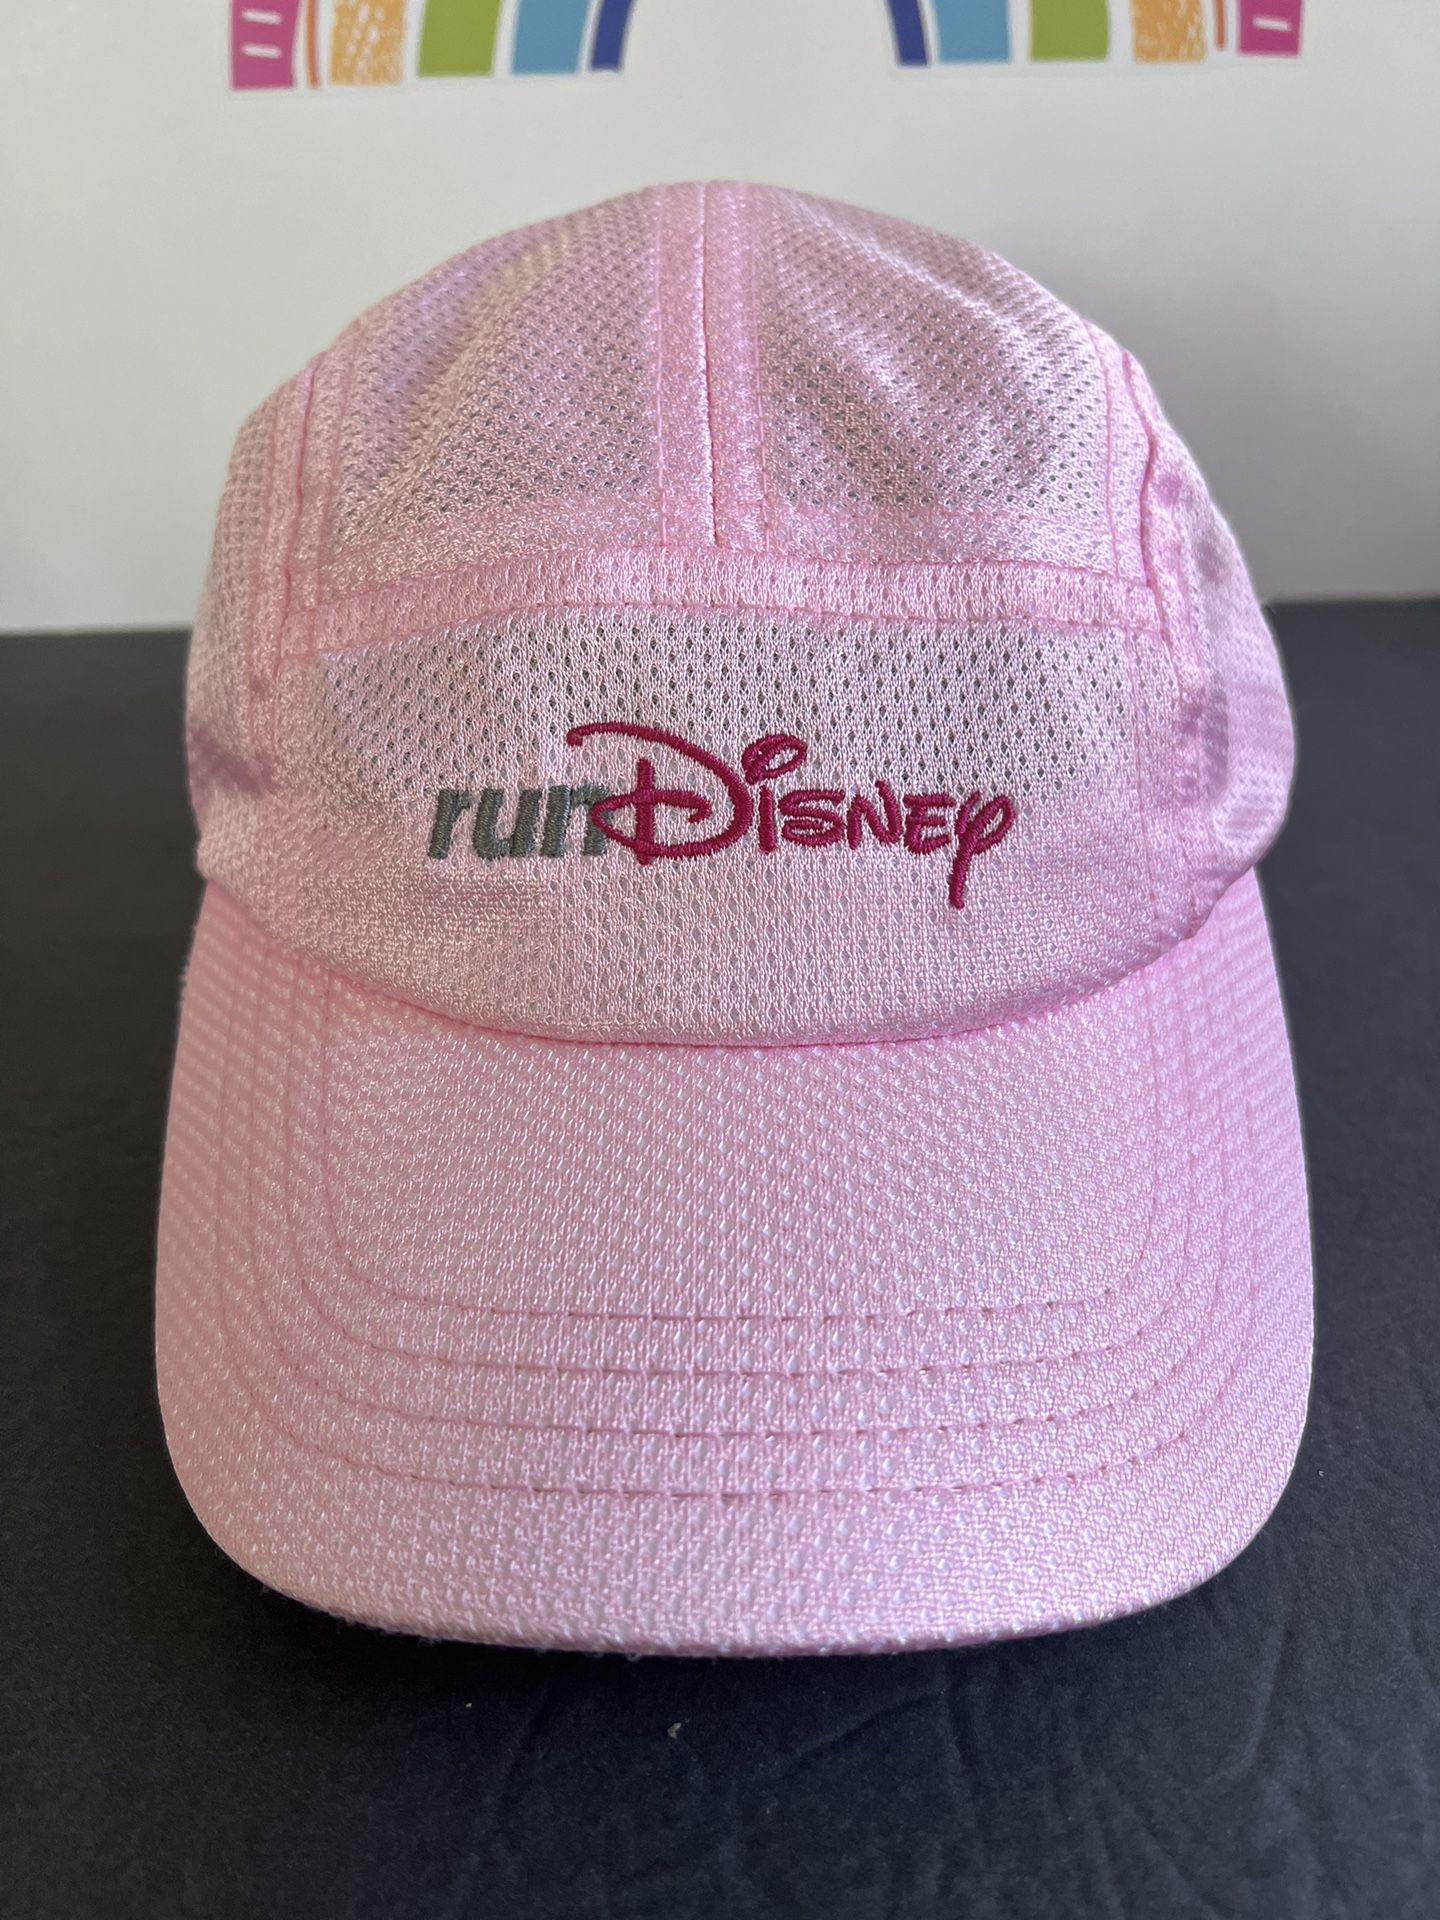 DISNEY WOMEN’S RUNNING CAP “ RUN DISNEY” A CUTE PINK SILK CAP 